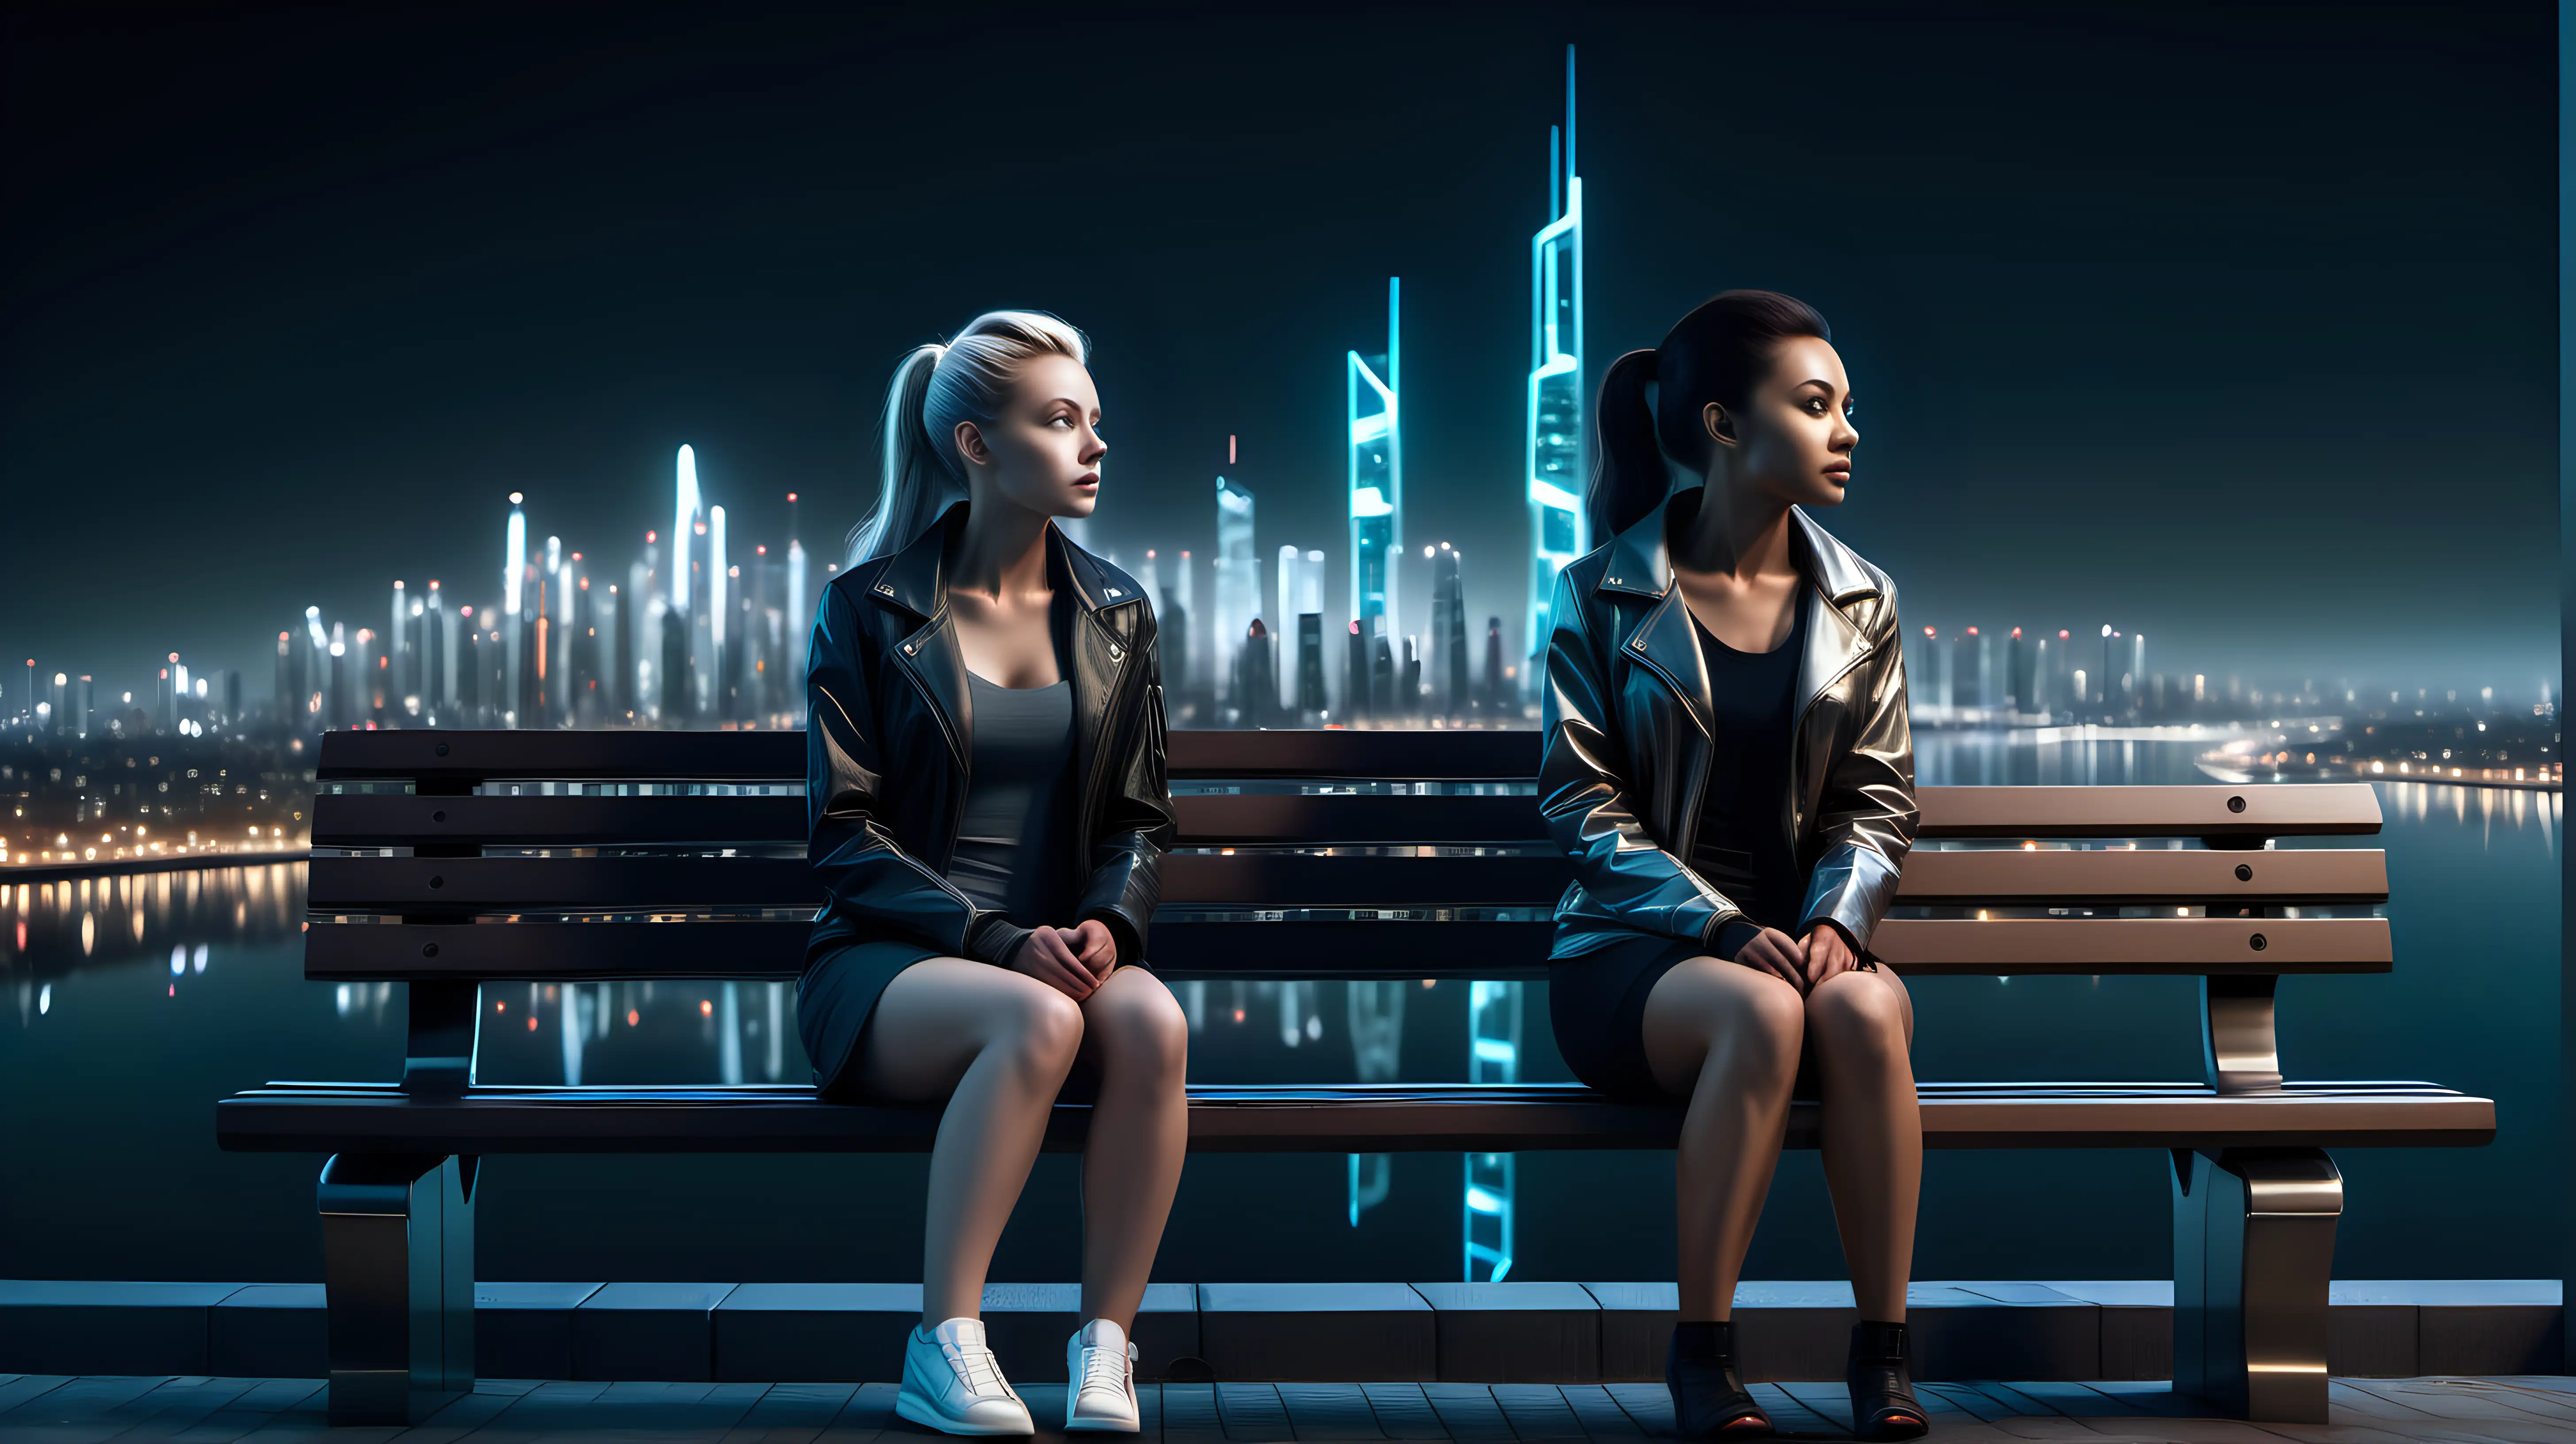 Futuristic Night Scene Two Women in UltraRealistic Detail on City Bench